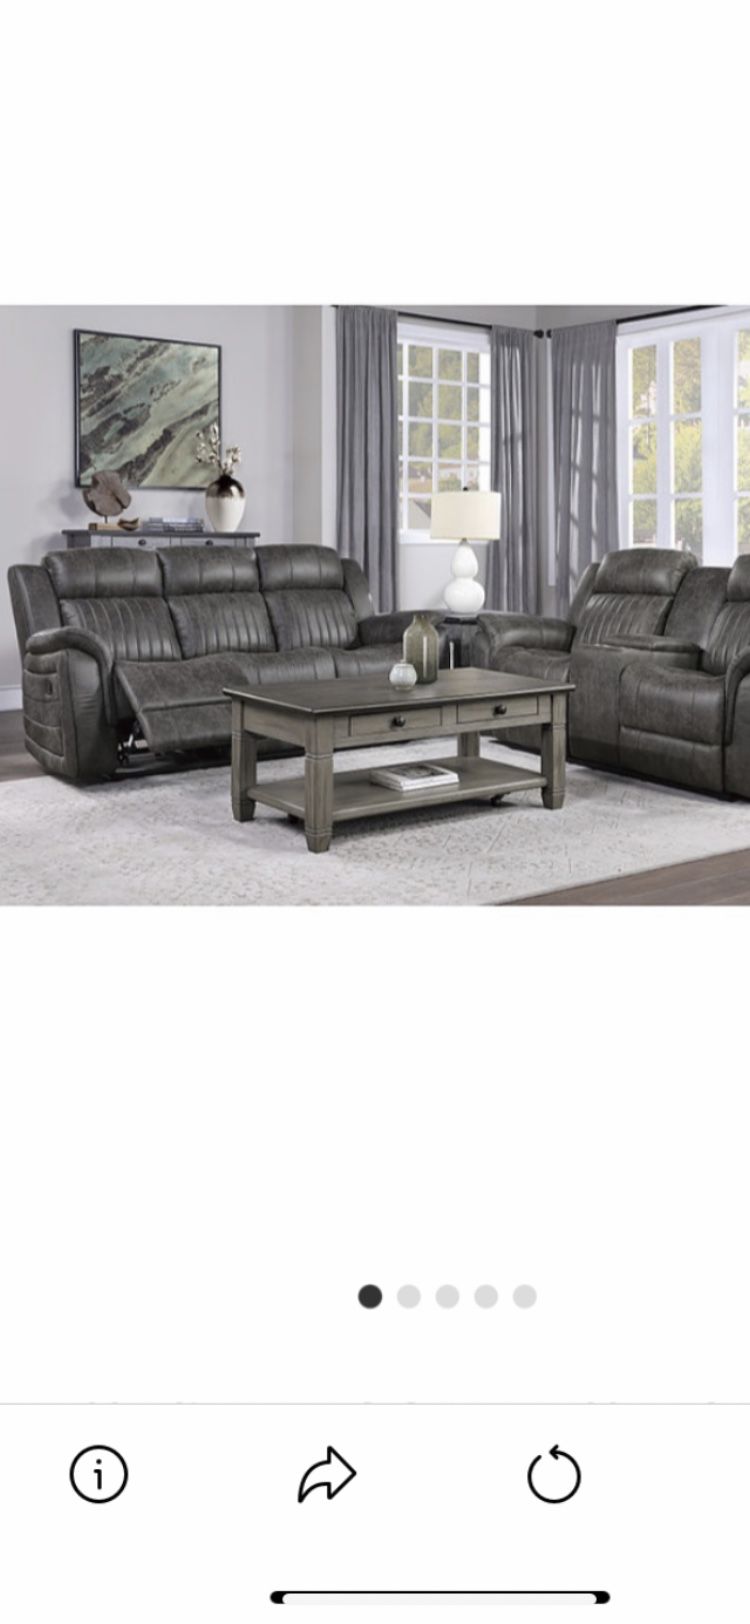 New Reclining Sofa And Loveseat 2pcs $1695 Hemet San Jacinto Store 